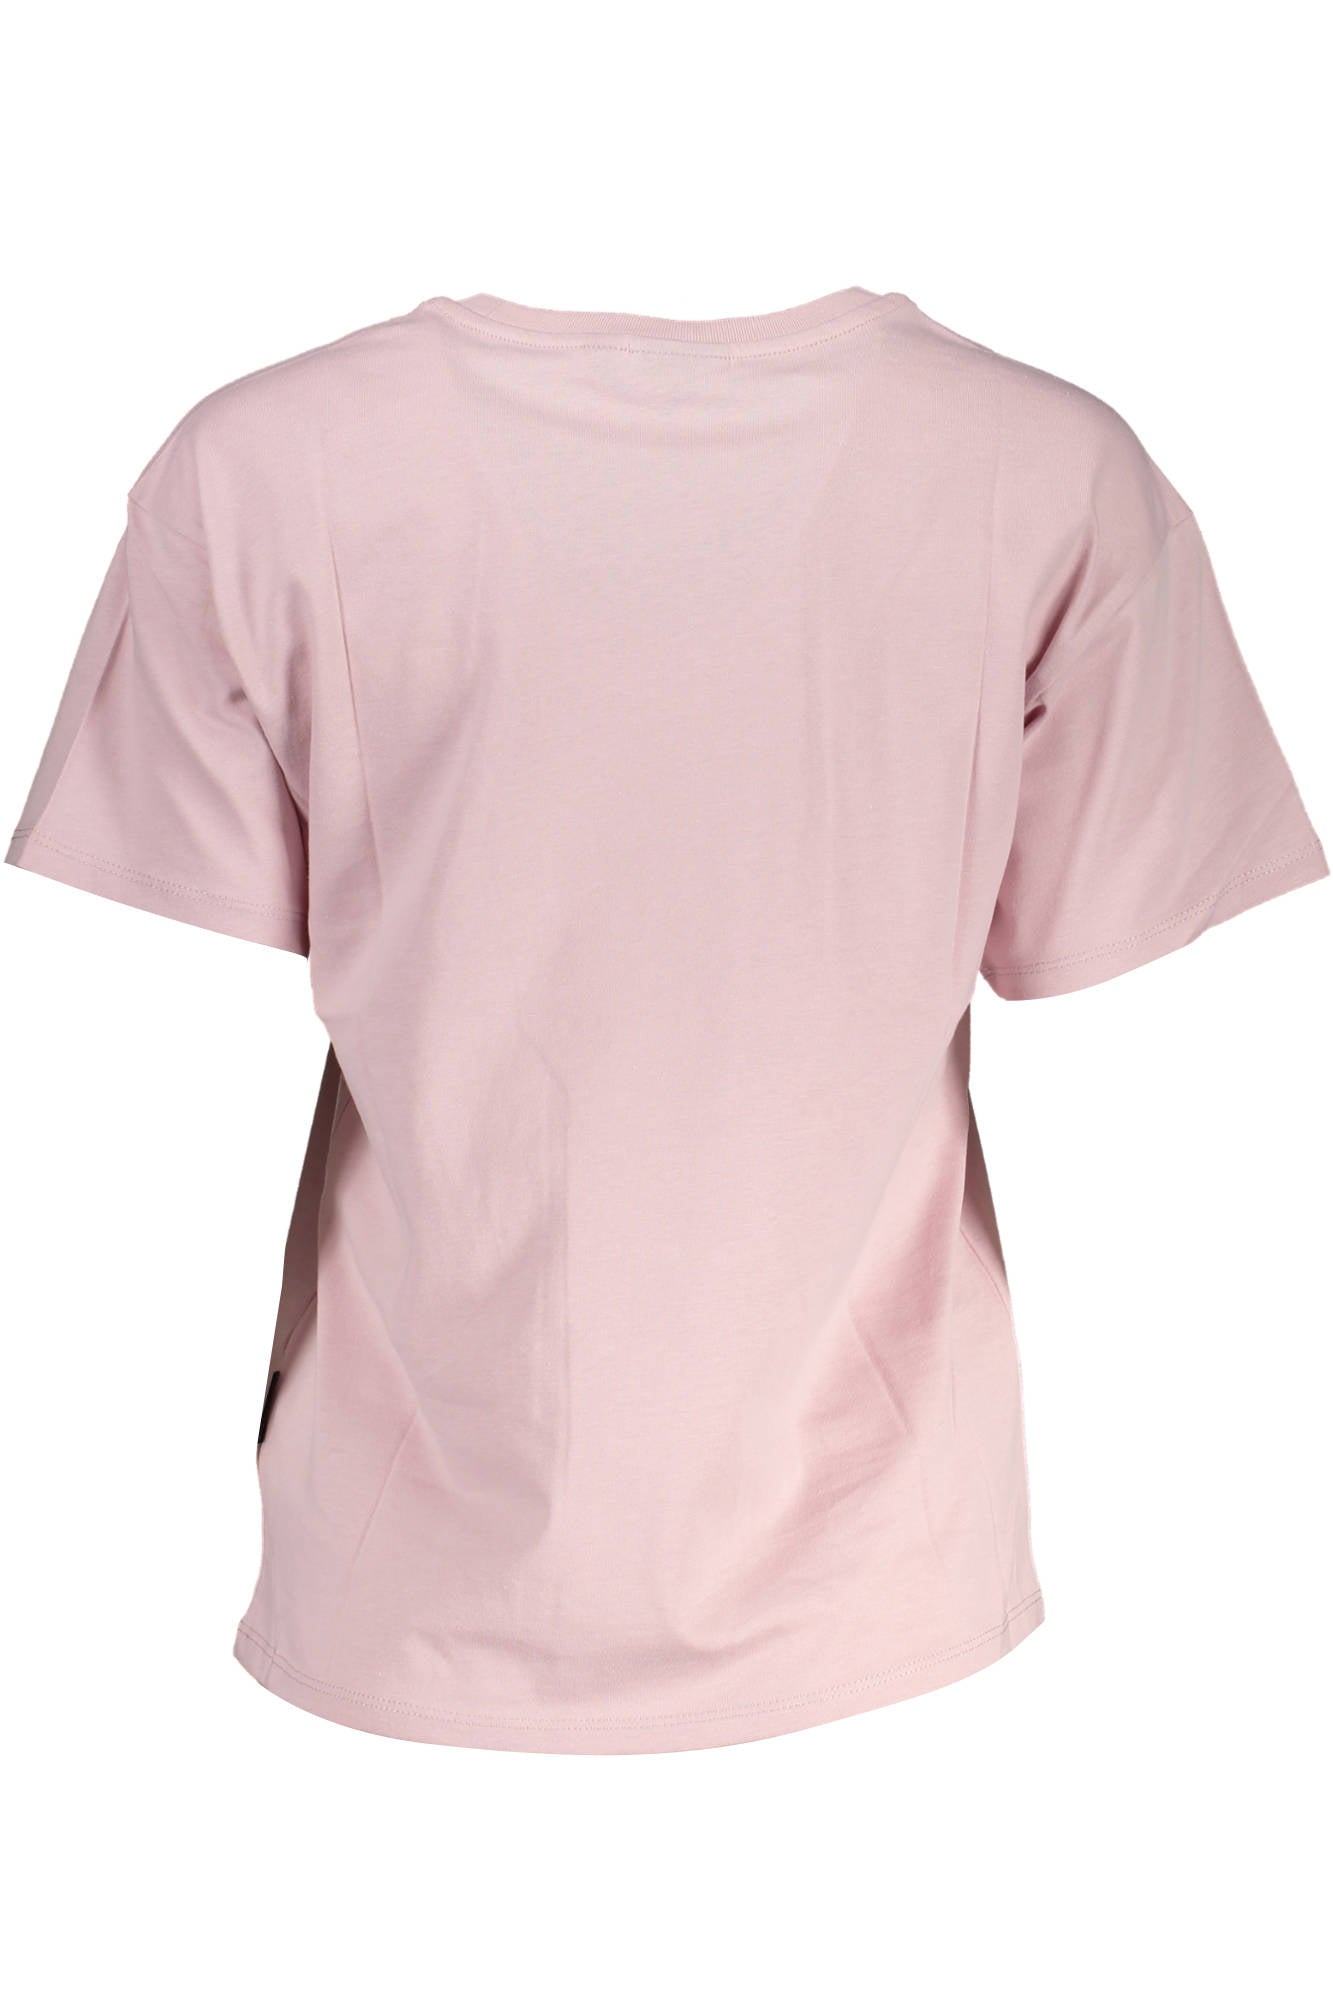 Napapijri Pink Cotton Tops & T-Shirt - Fizigo